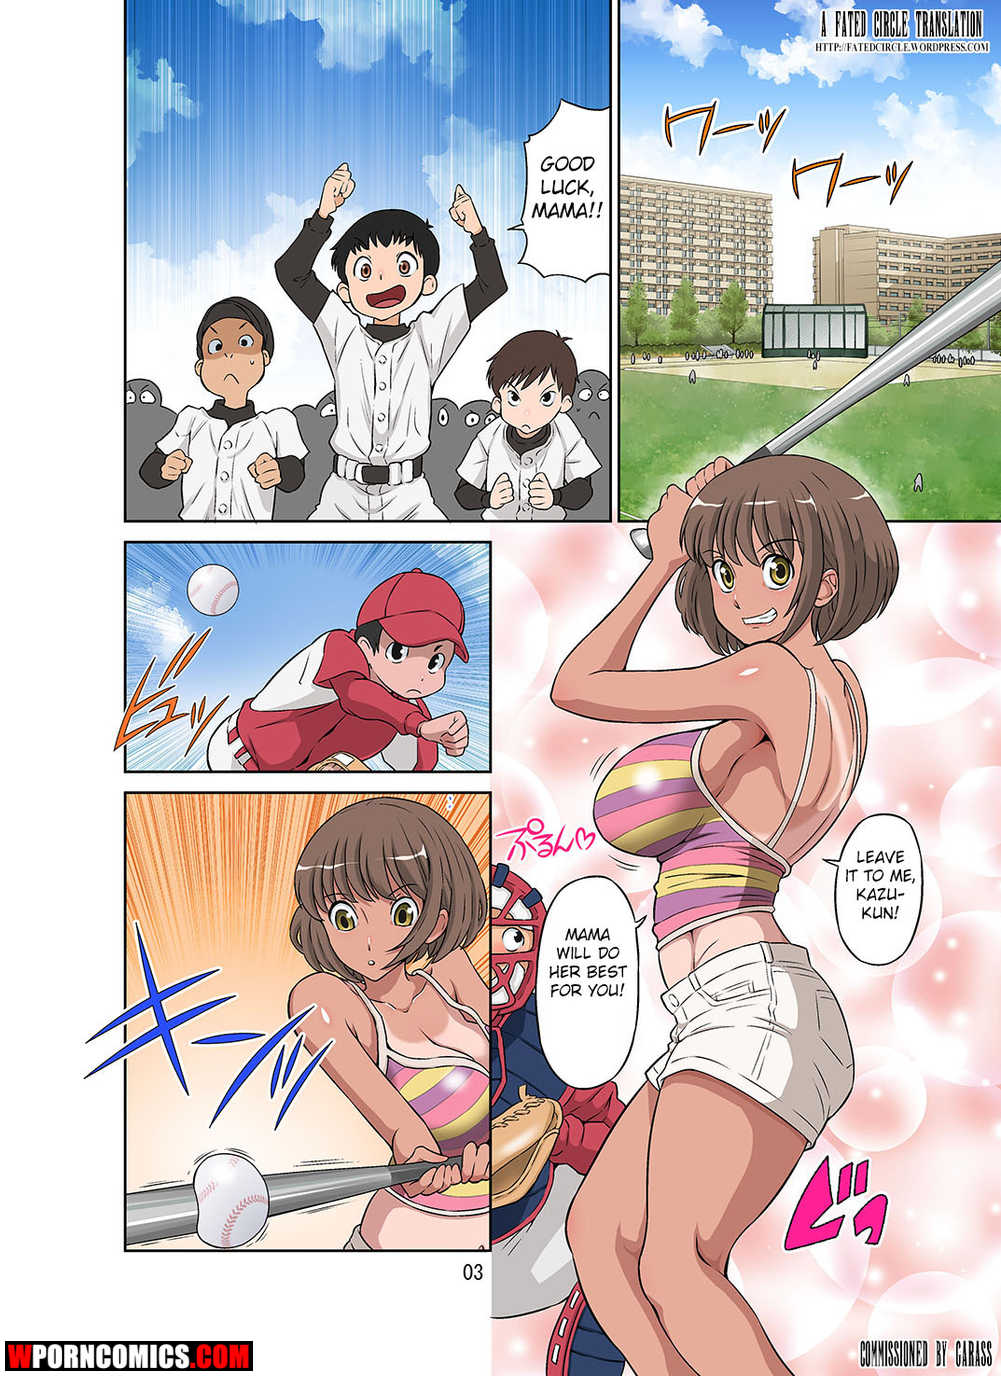 Anime Porn Comic